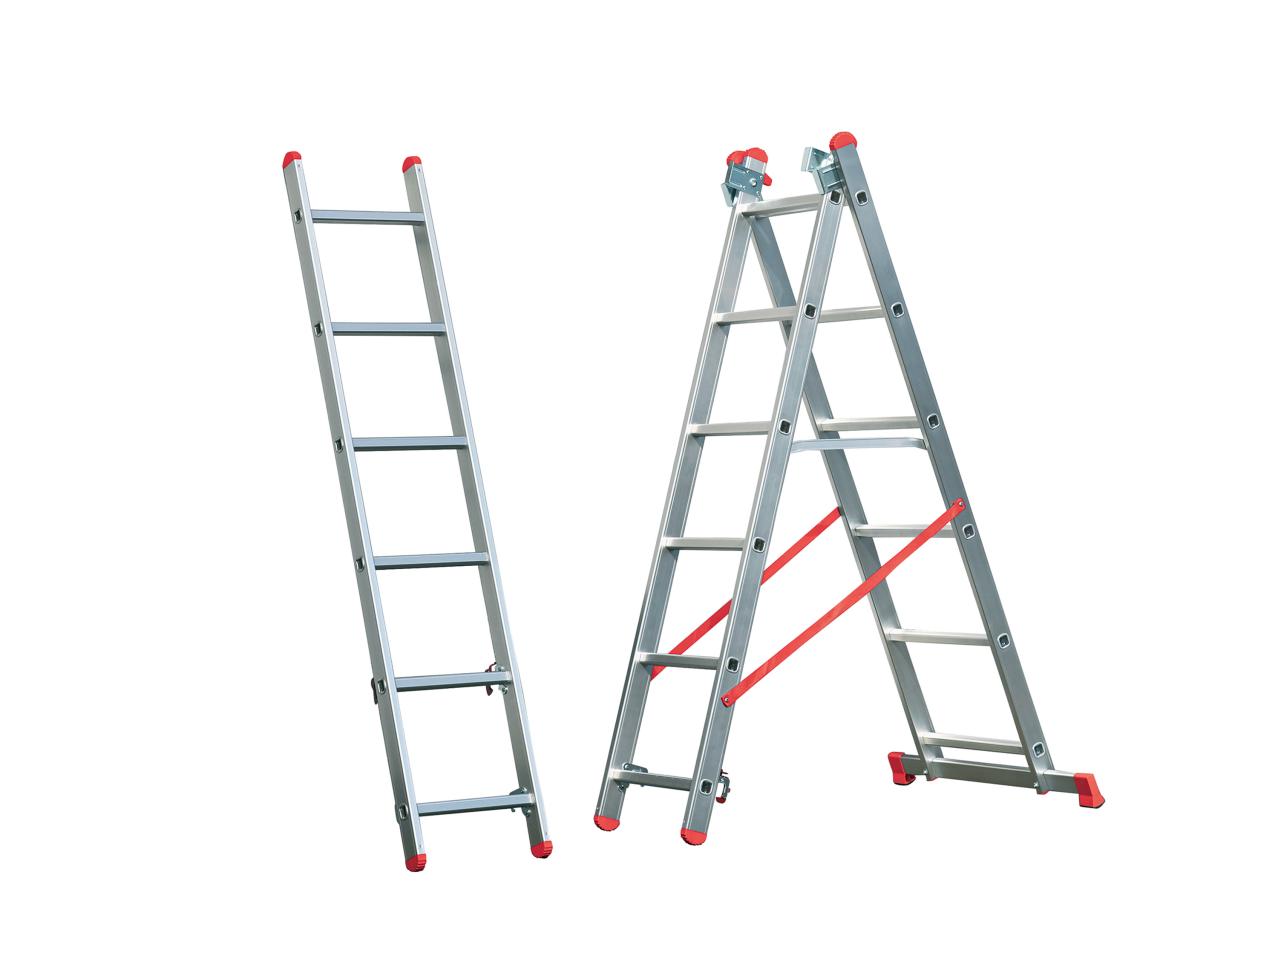 Powerfix PROFI 6-in-1 Multi-Purpose Ladder1